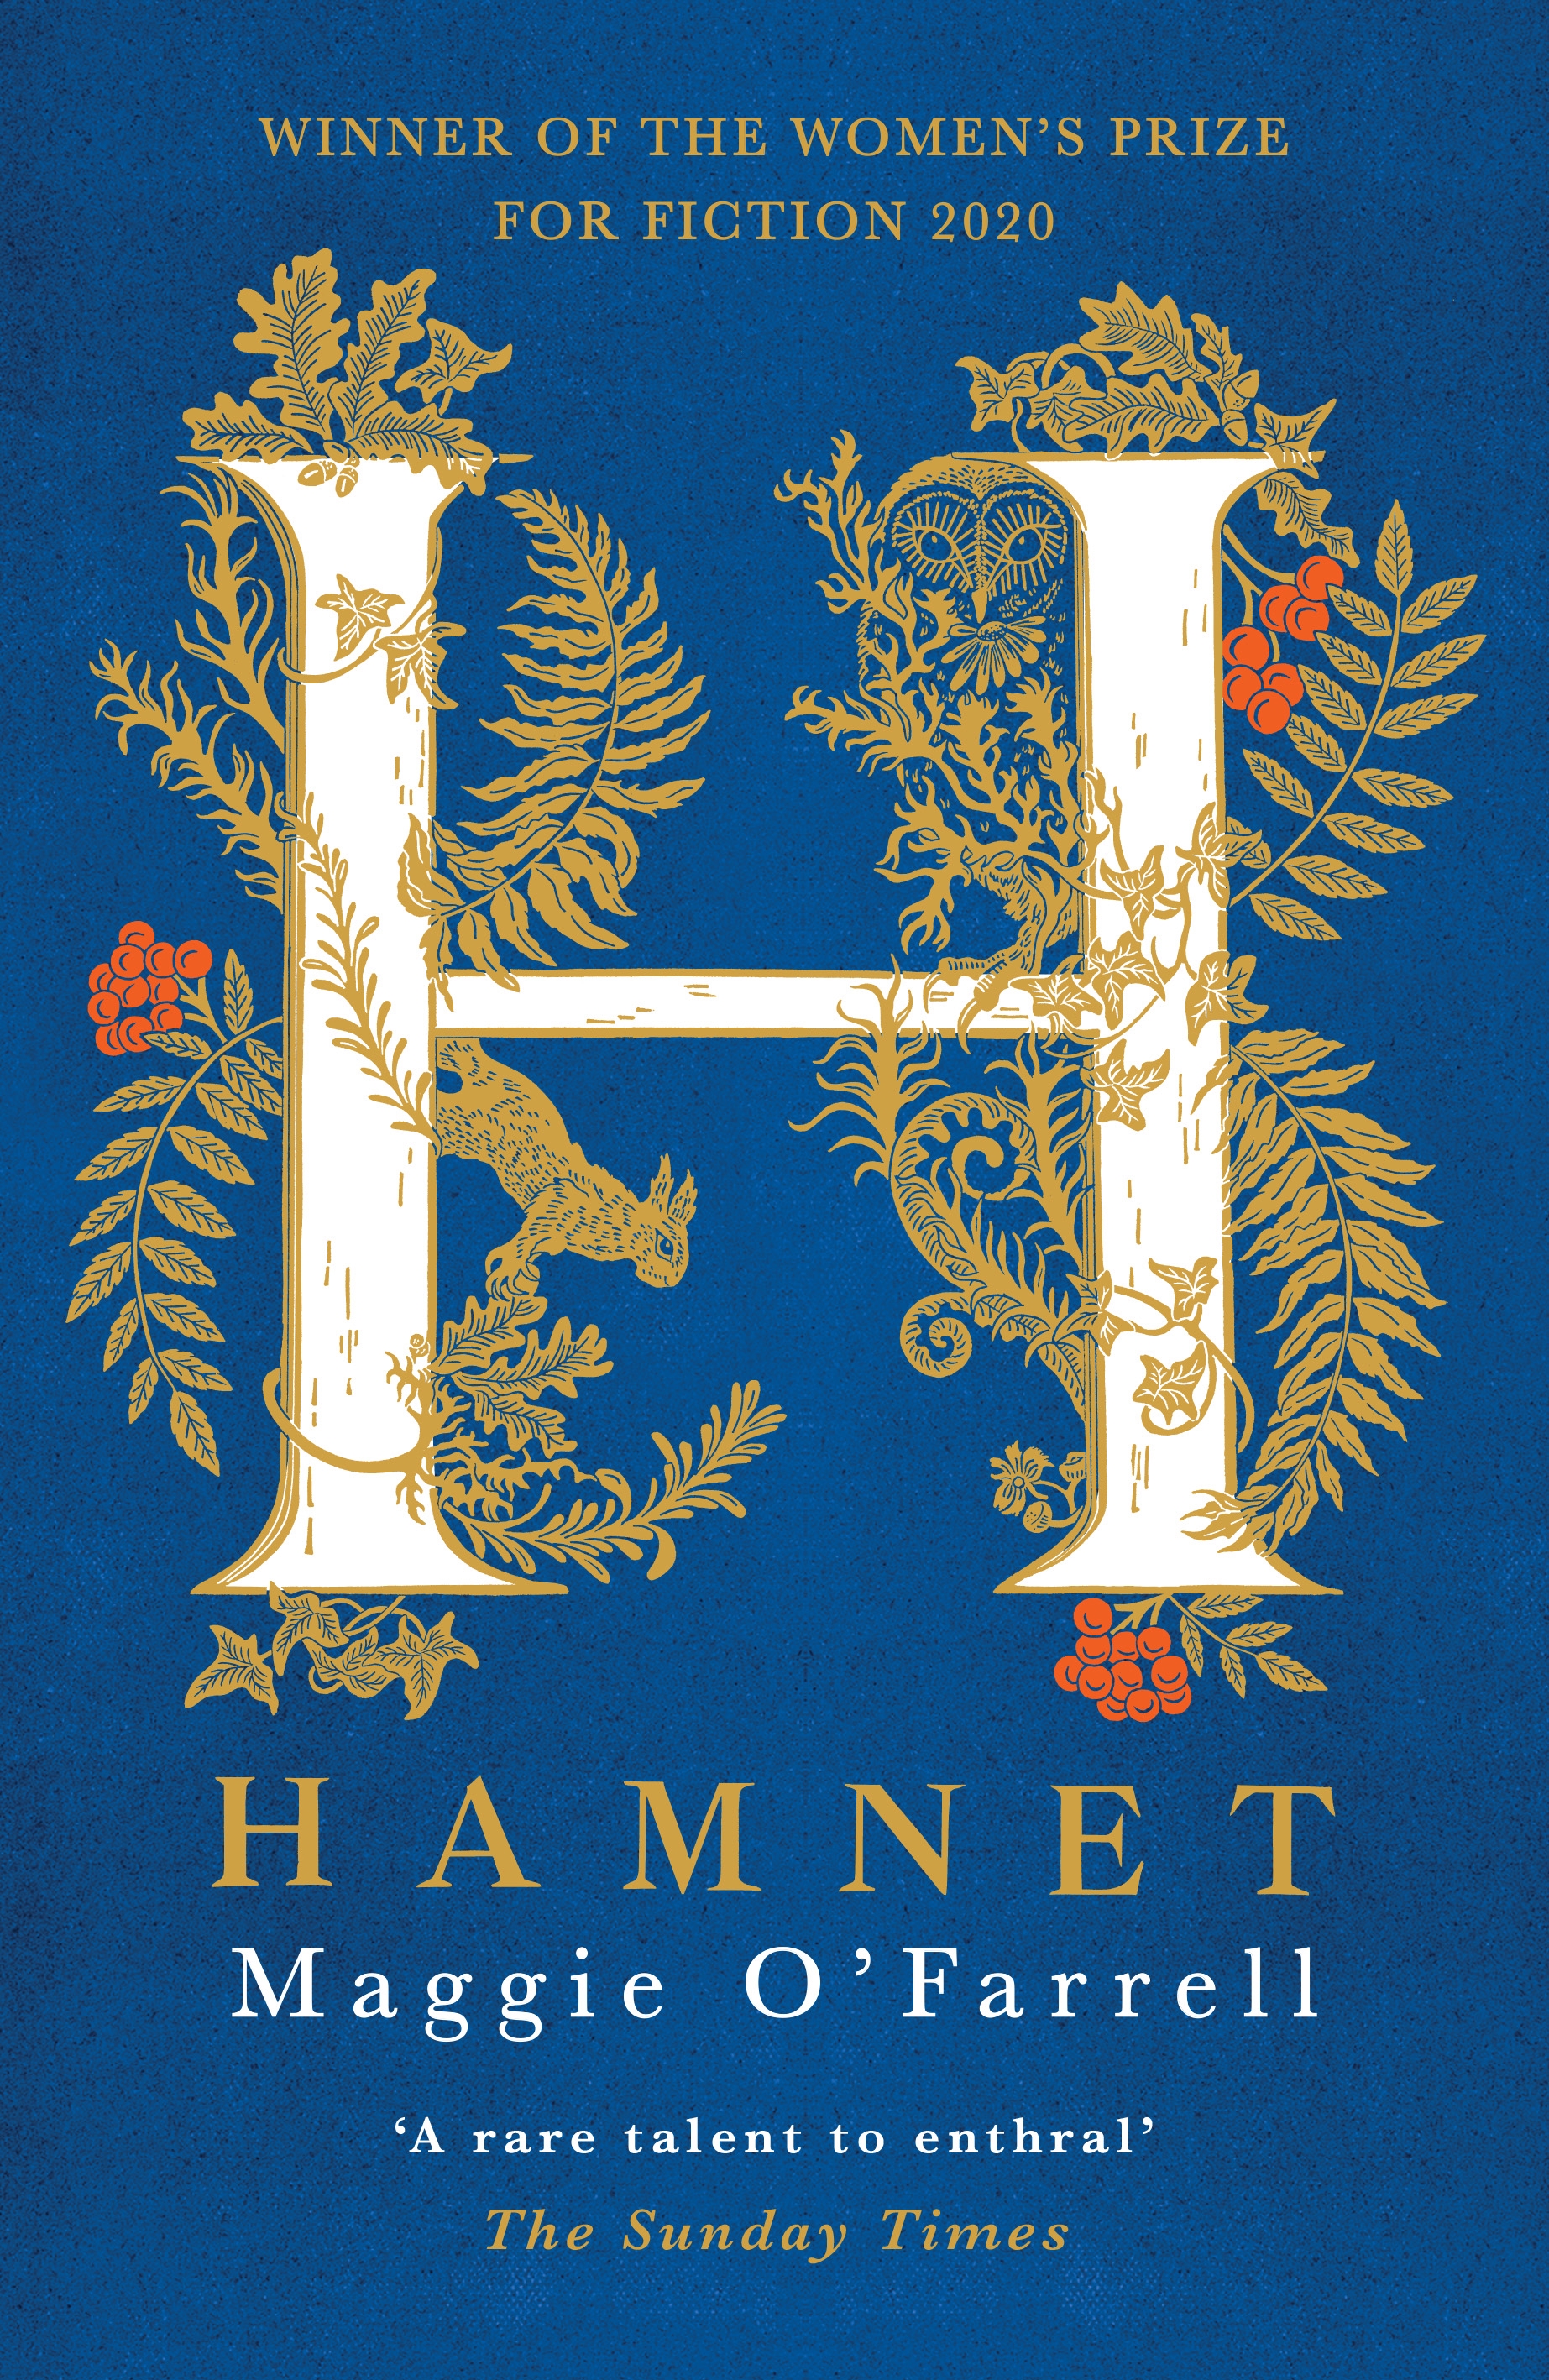 Hamnet book cover.